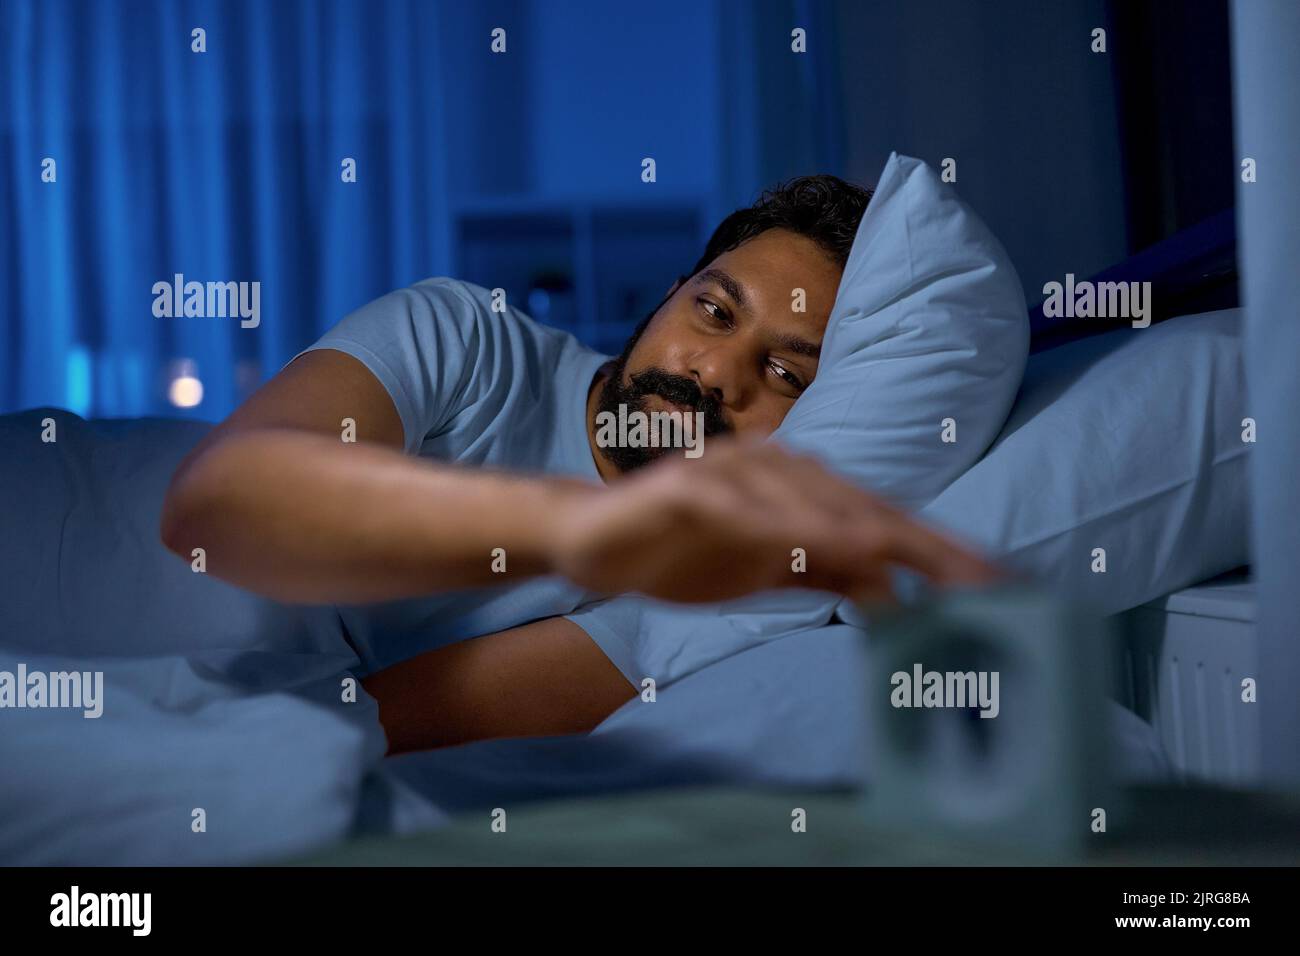 indian man awaking because of alarm clock at night Stock Photo